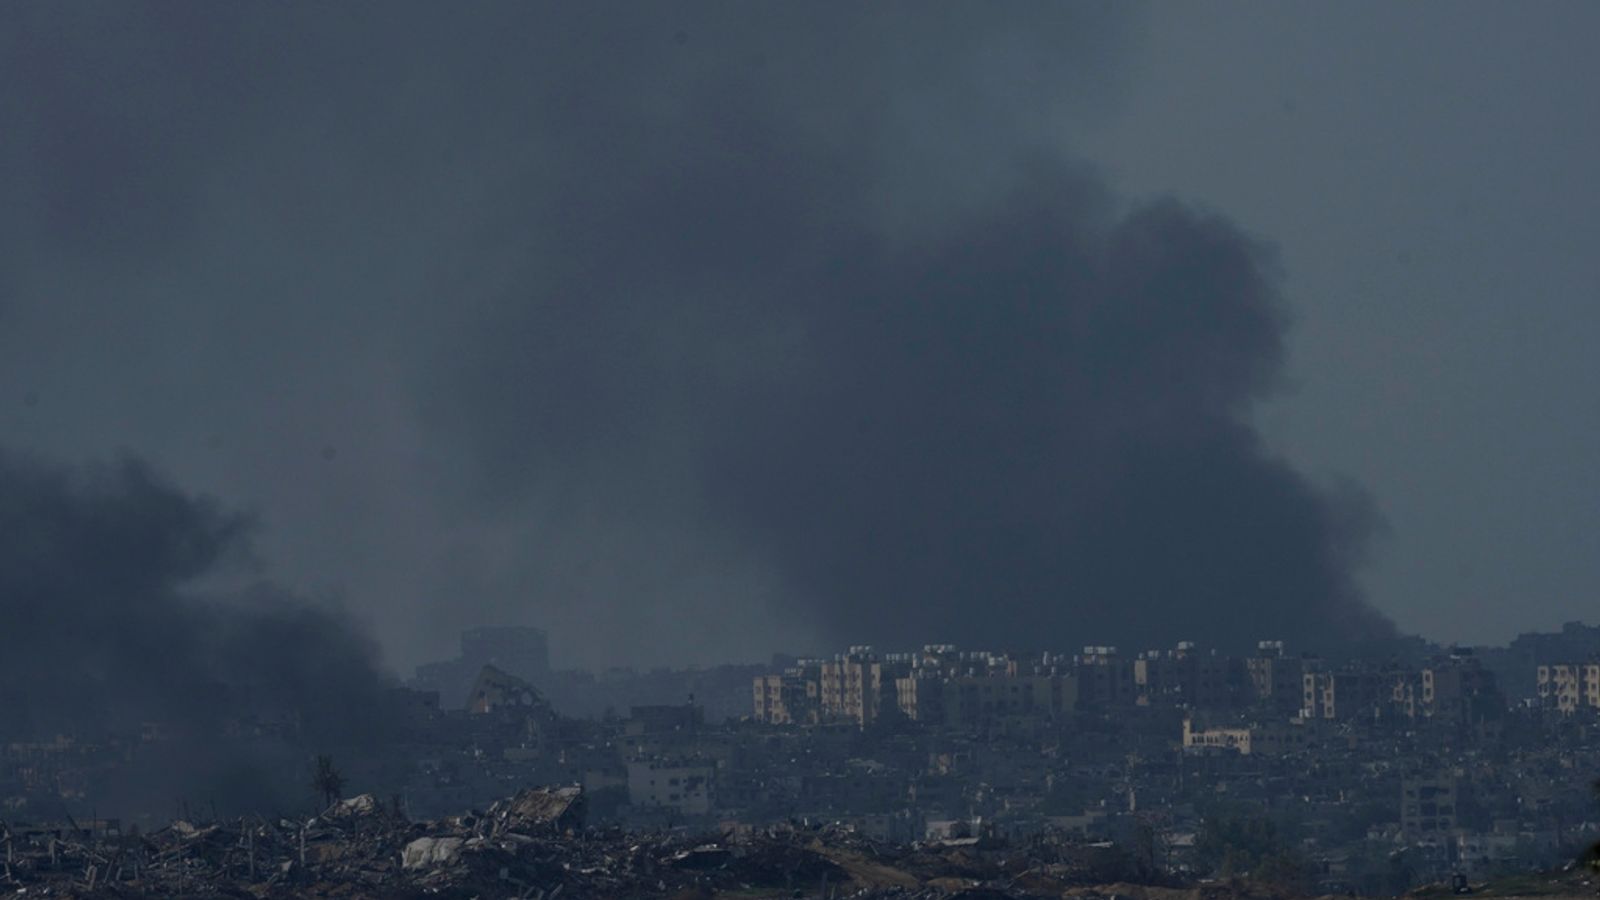 Israel-Hamas war: UN Security Council resolution to demand ceasefire in Gaza fails